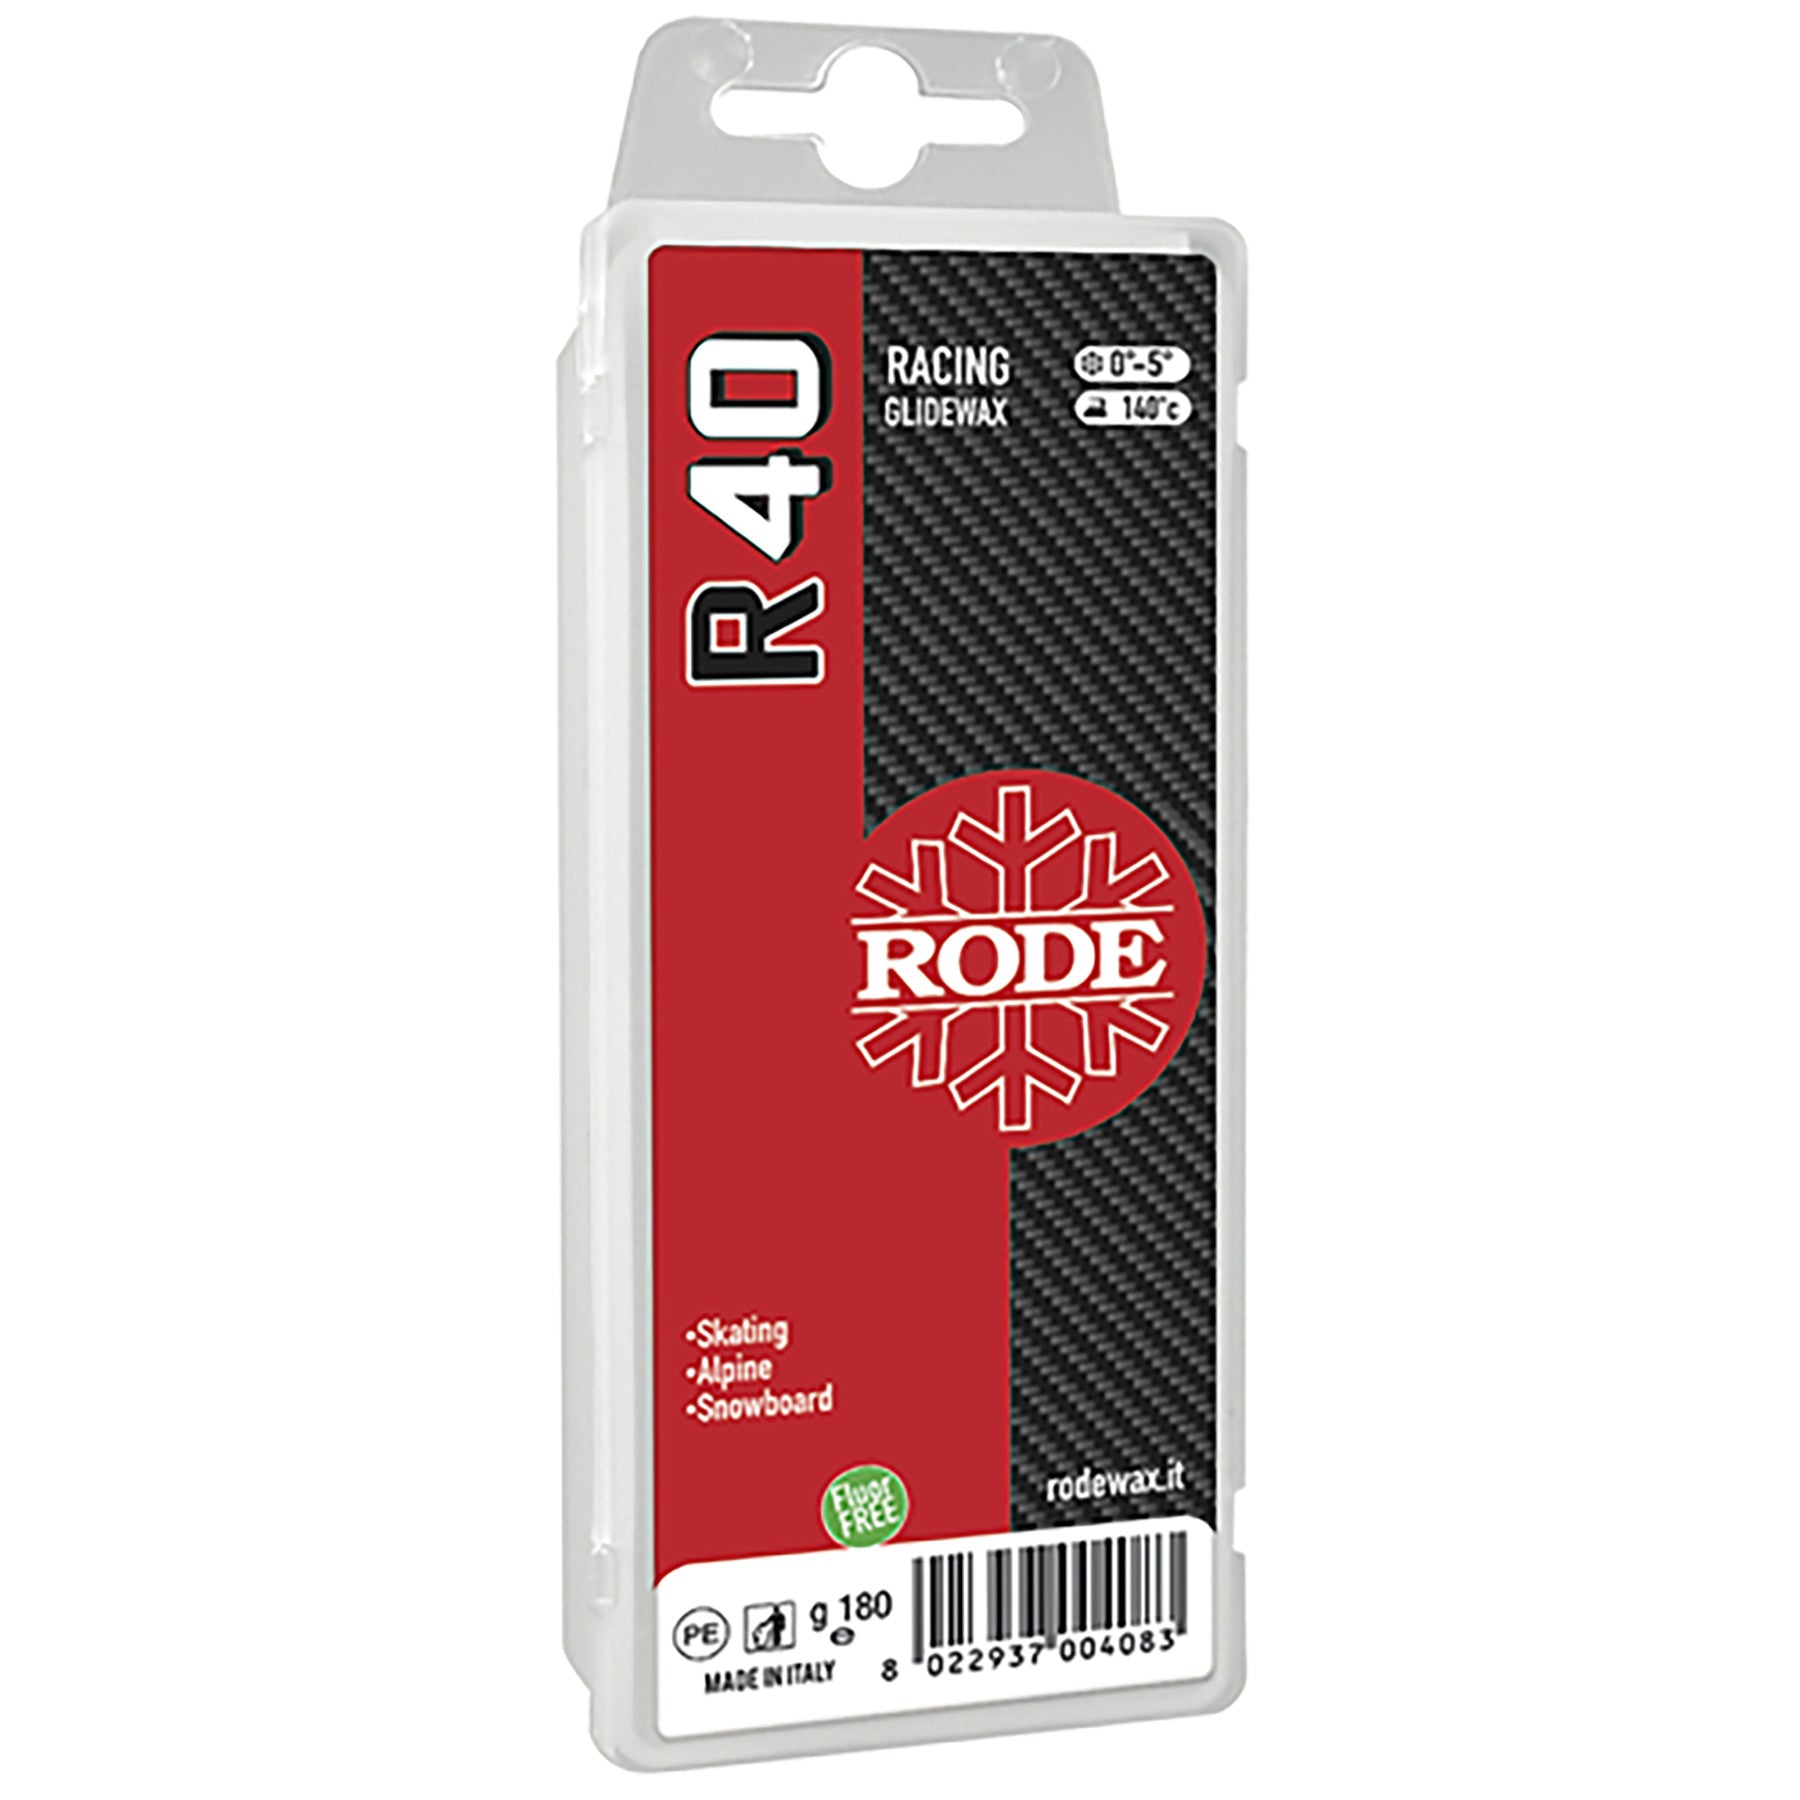 Buy r40-red-0-5-c Rode Racing Glide Wax 180g